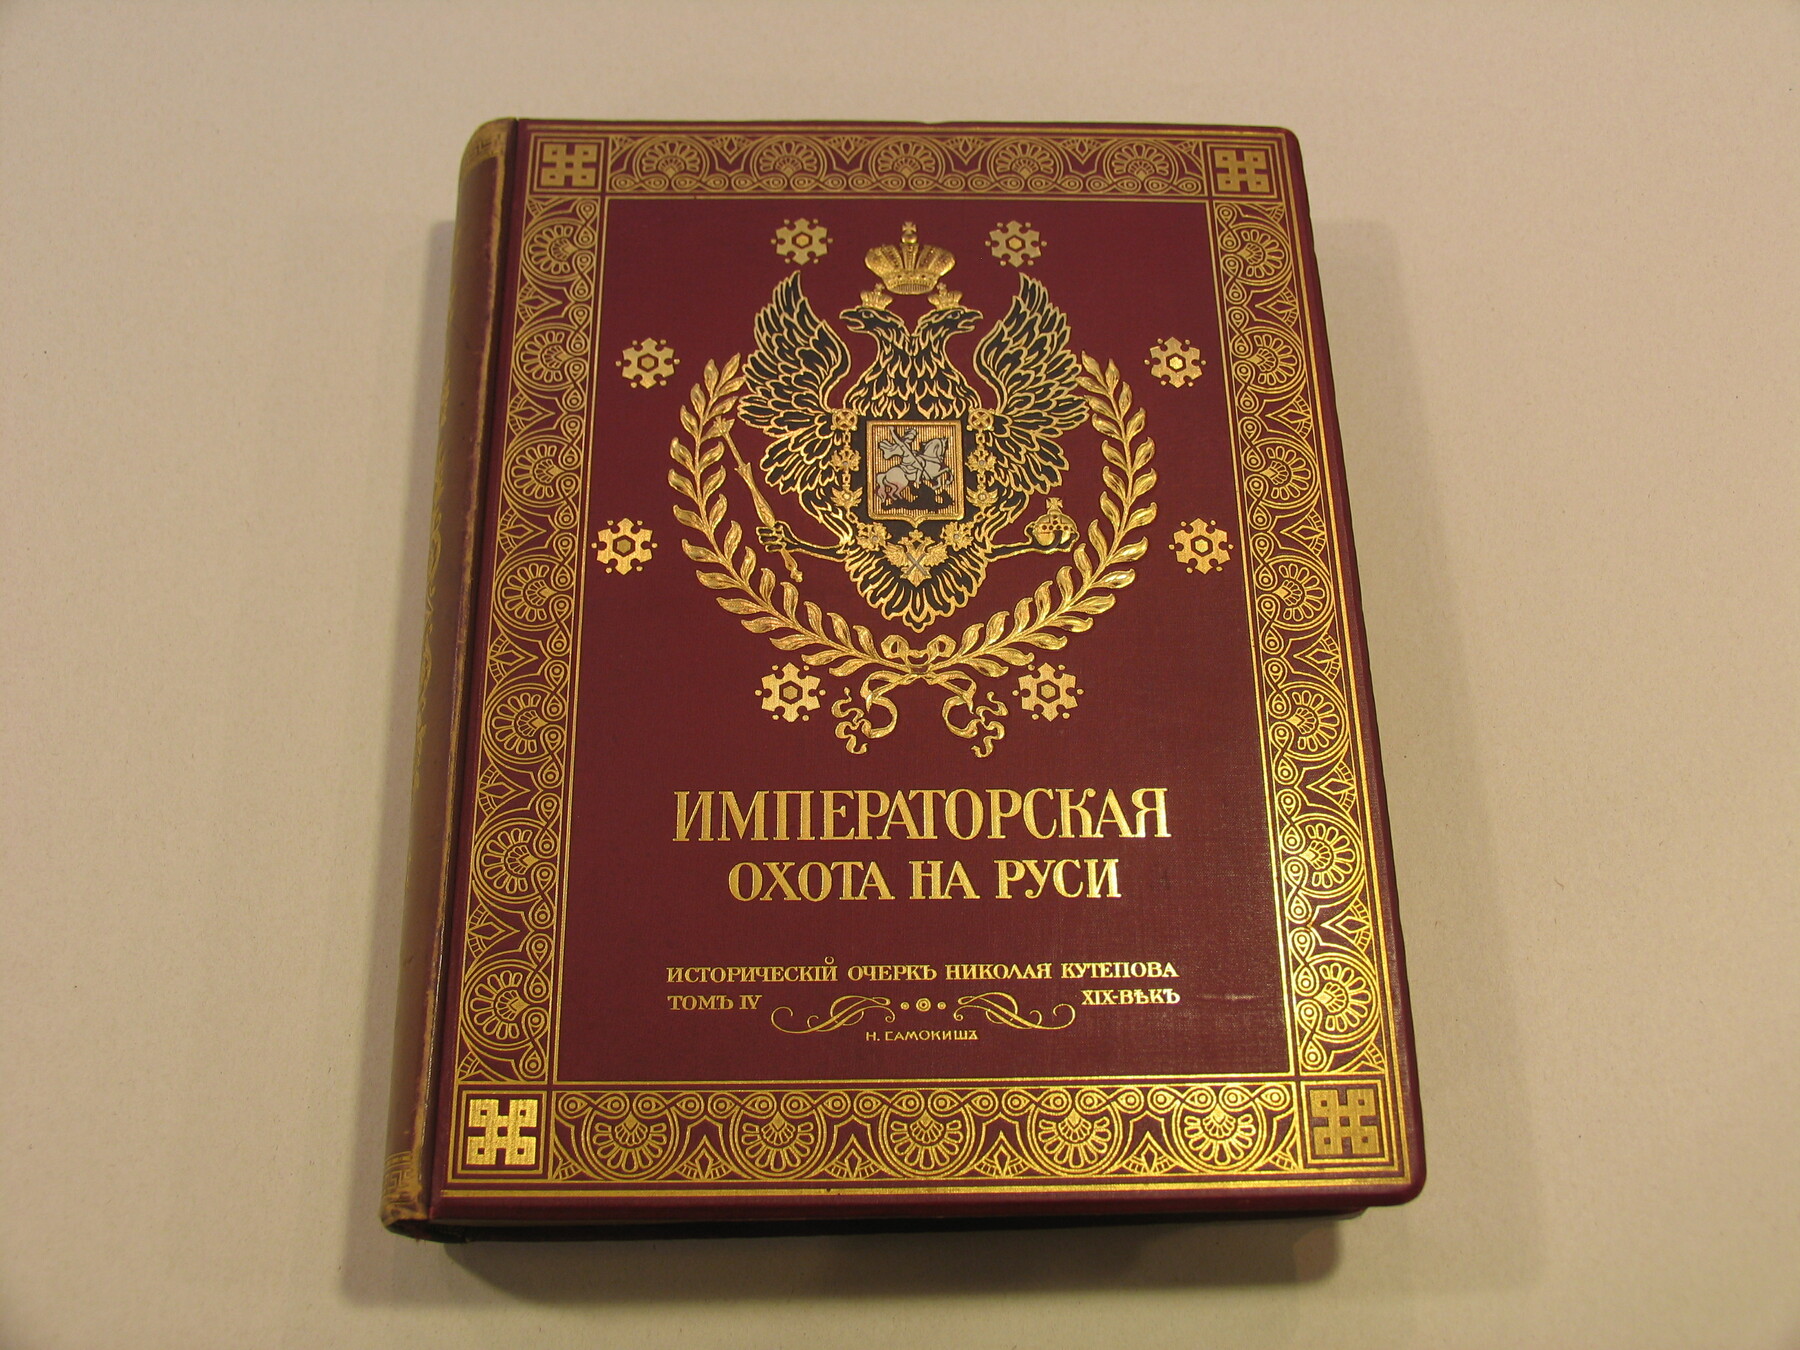 Velikokniazheskaya I Tsarskaya Okhota na Rusi, (Grand Ducal and Tsarist Hunting in Russia)